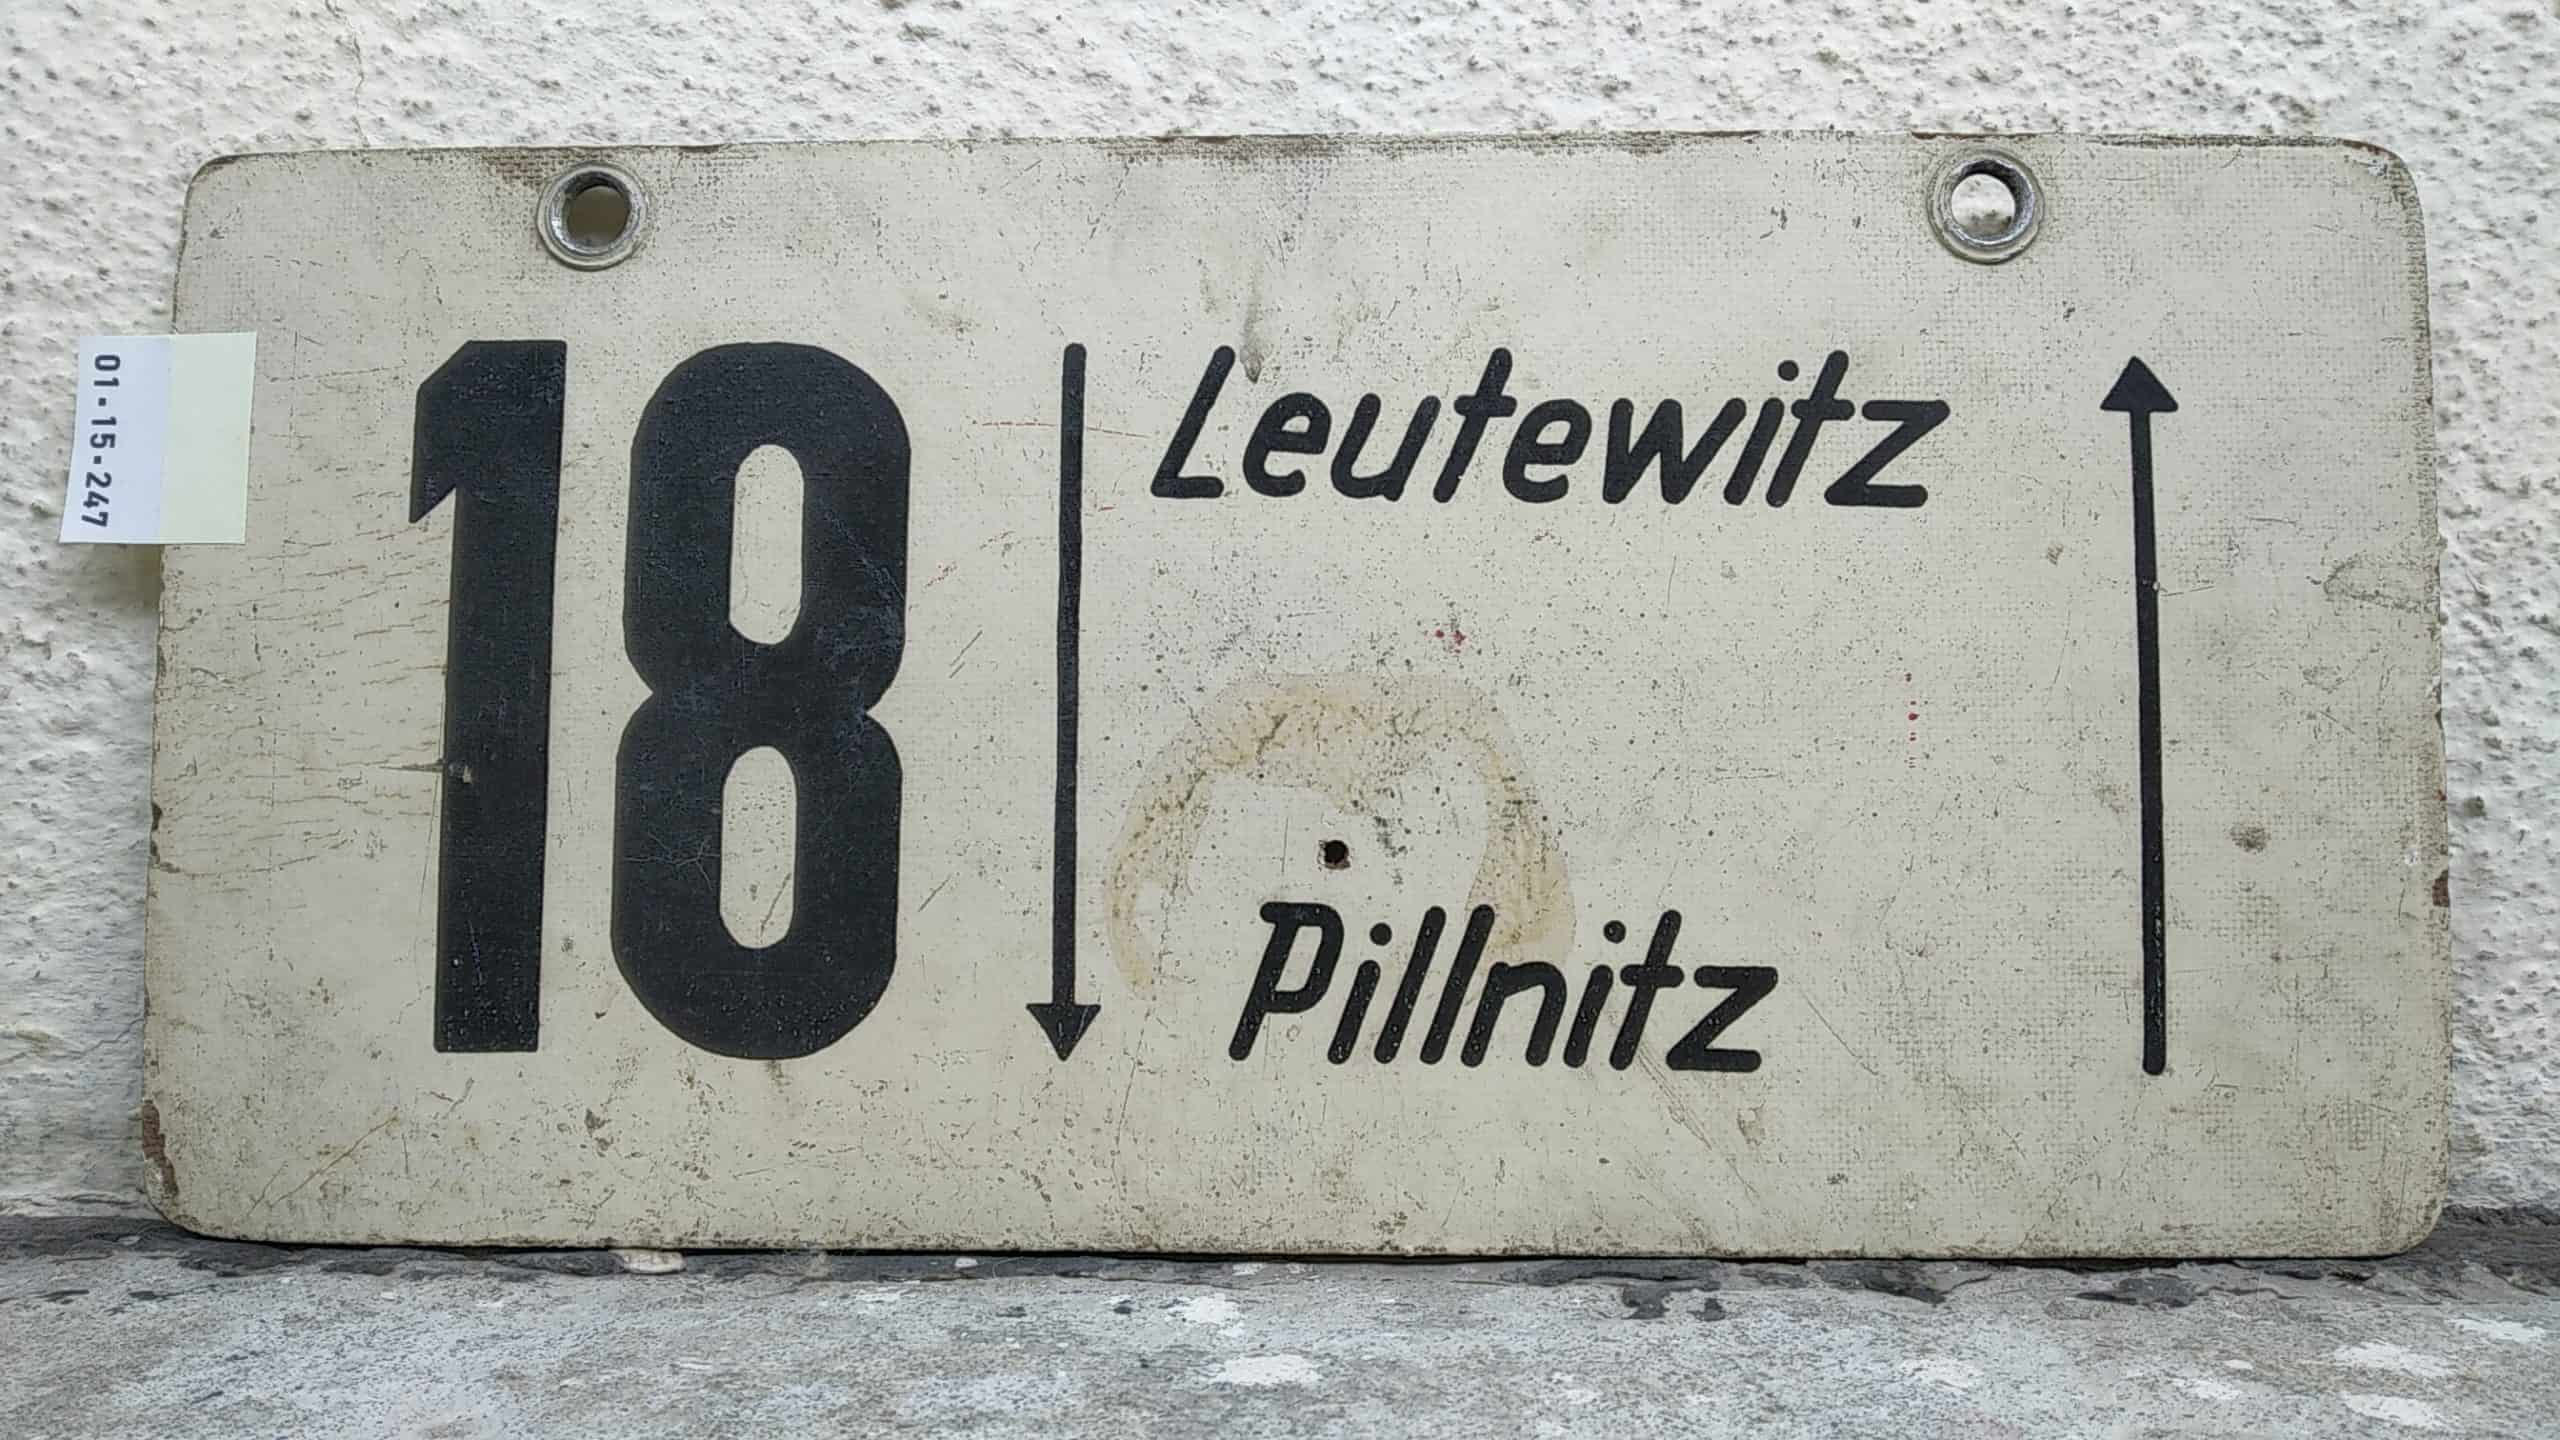 18 Leutewitz – Pillnitz